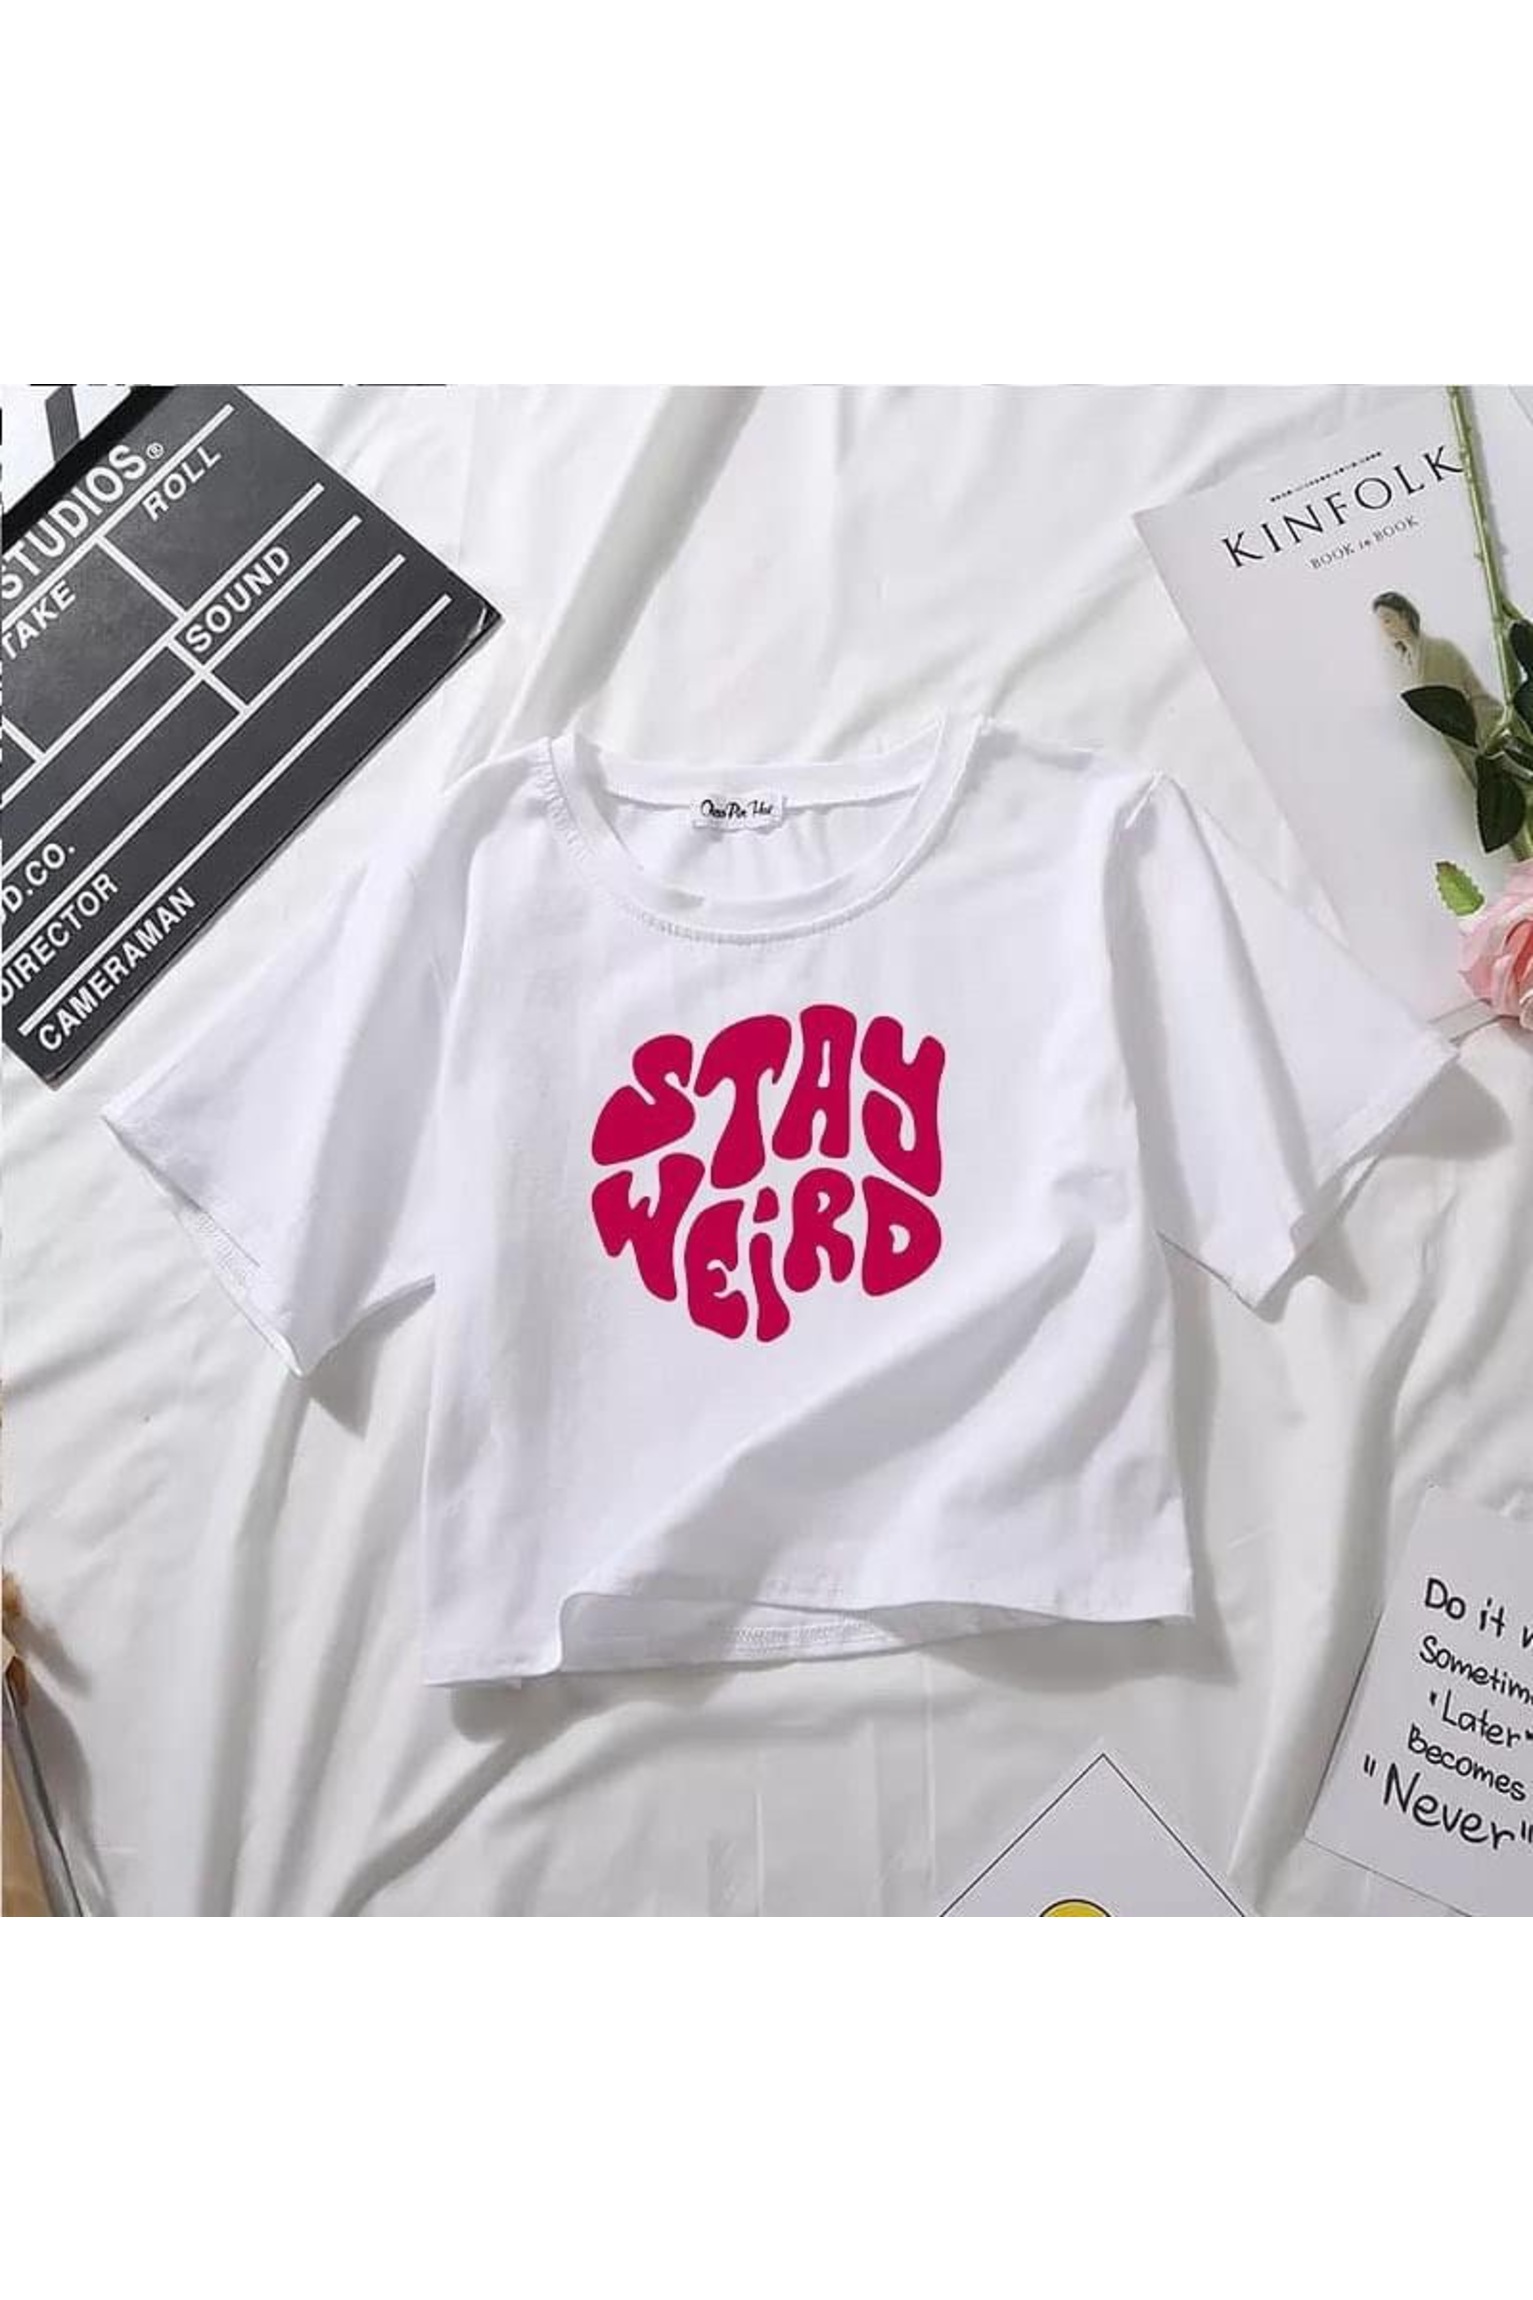 Stay Weird Printed T-shirt for Women